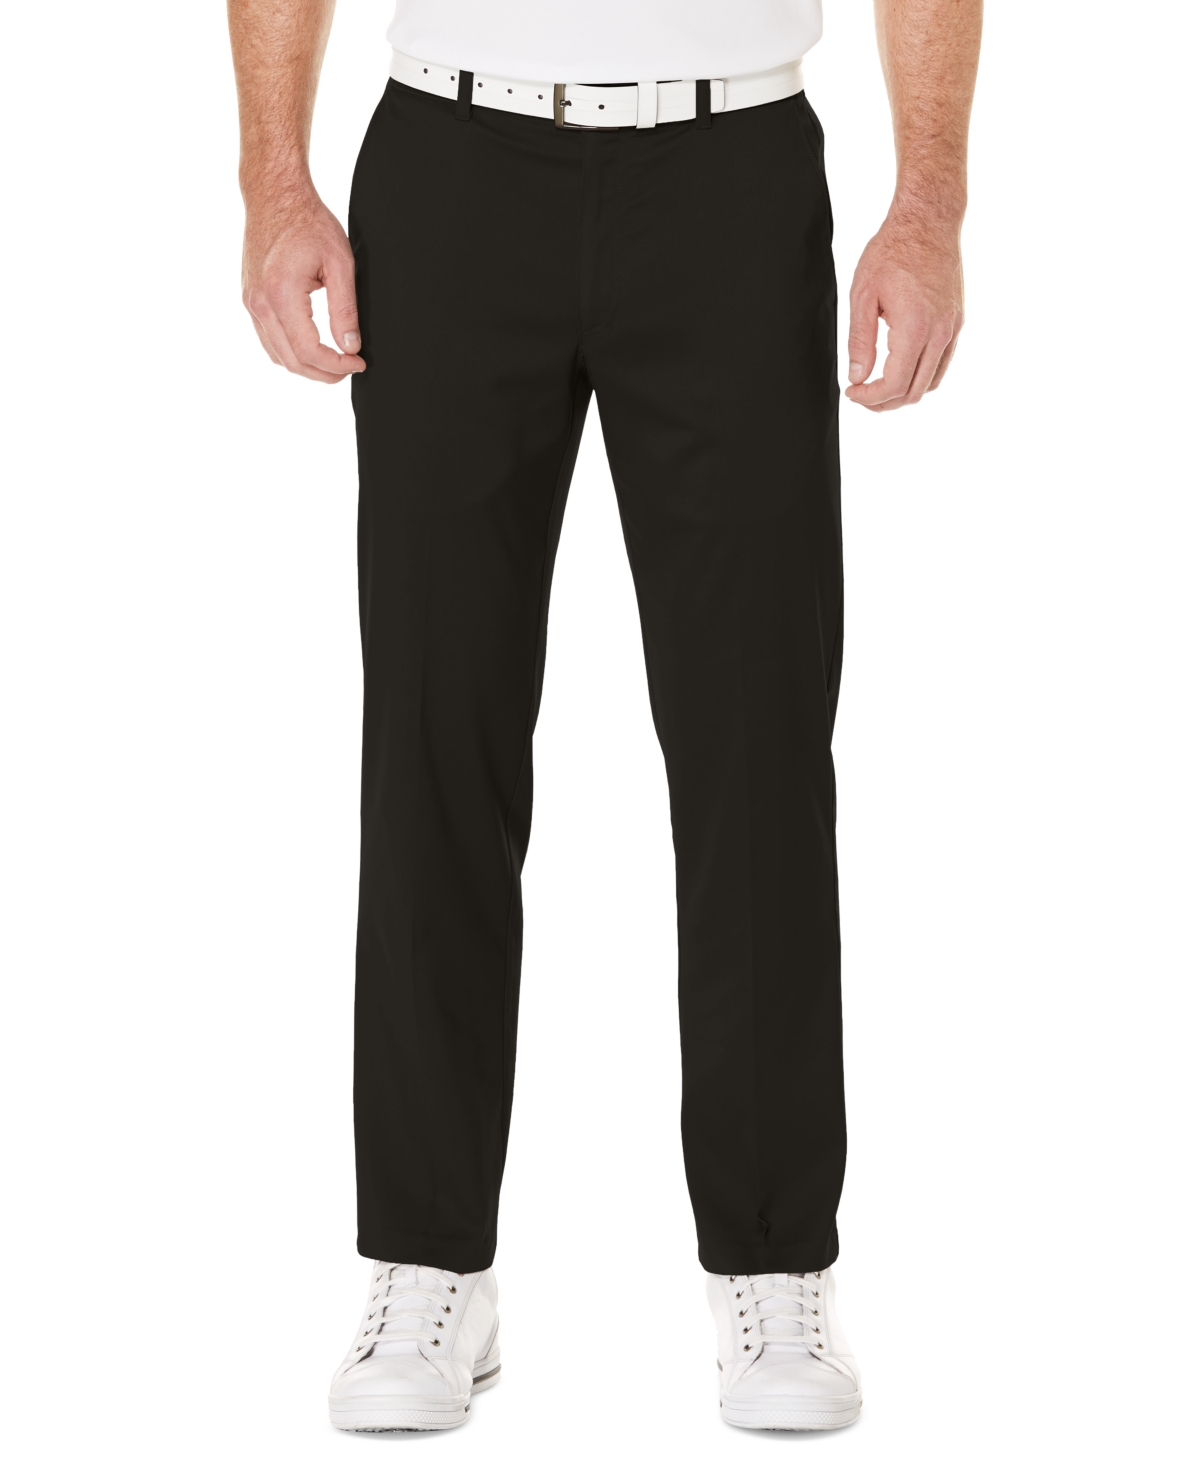 Pga Tour Men's Flat-front Golf Pants In Caviar Black